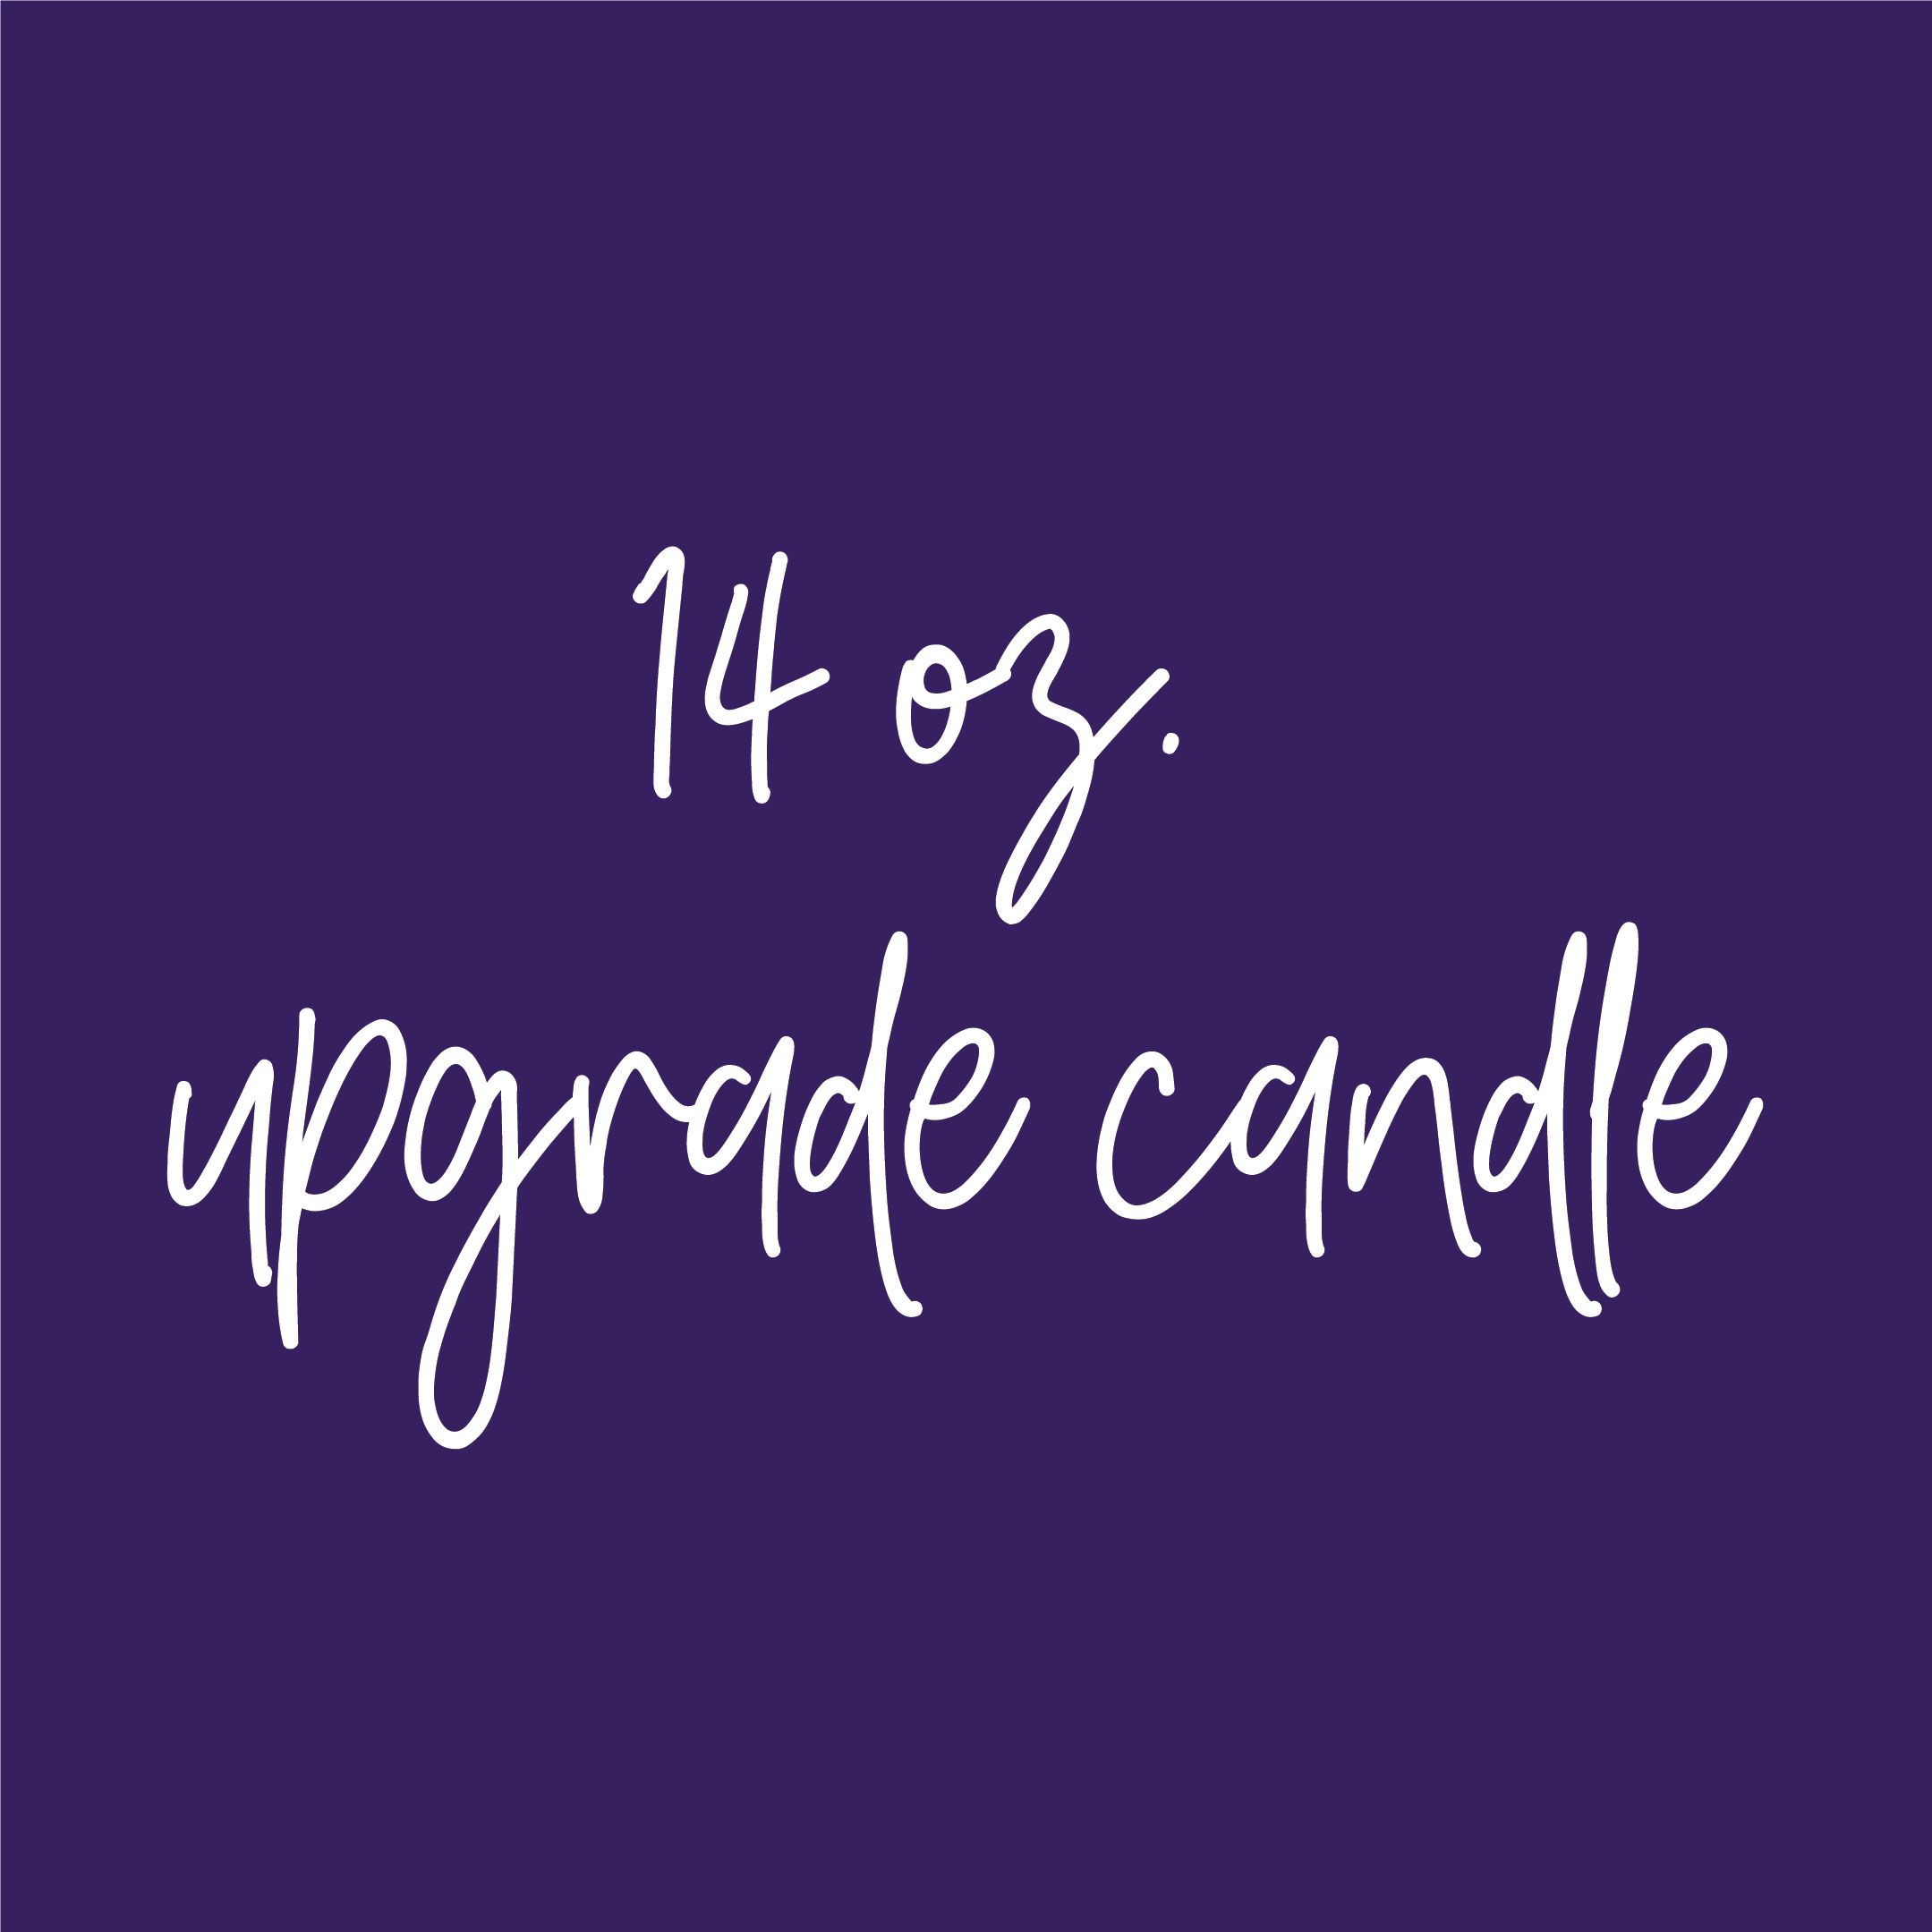 14 oz. Upgrade Candle Reorder